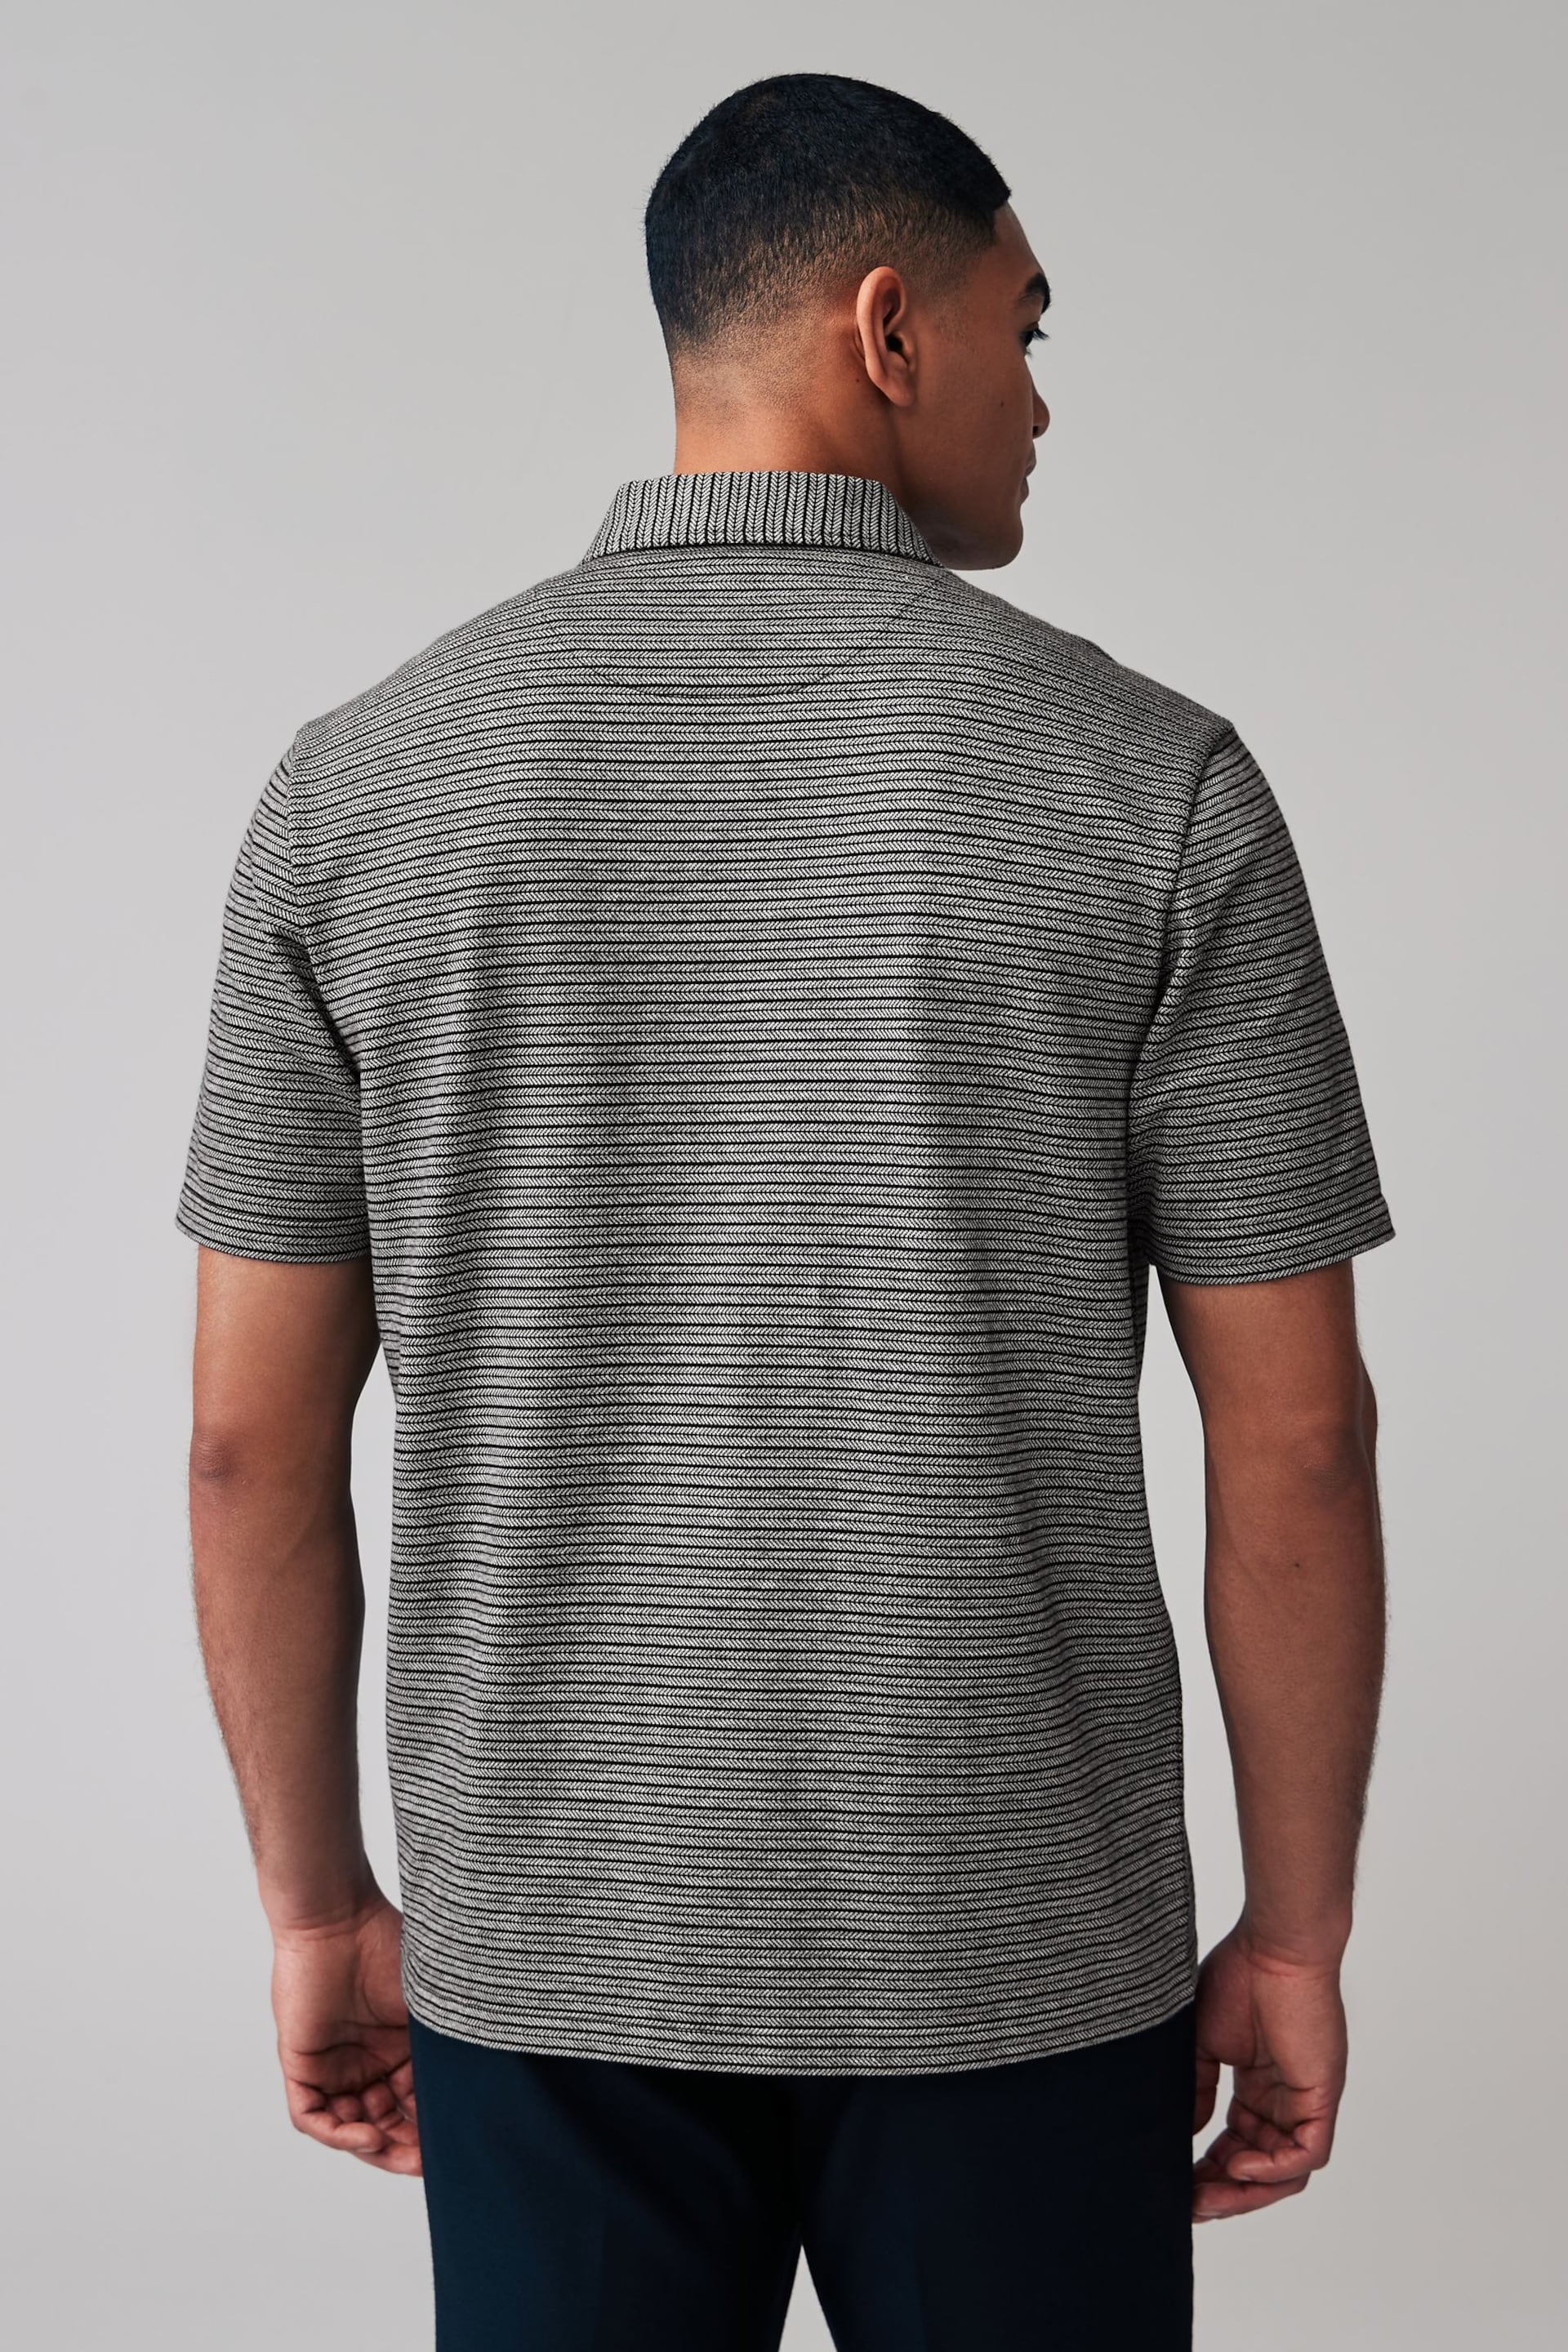 Grey/Black Zip Neck Smart Polo Shirt - Image 2 of 7